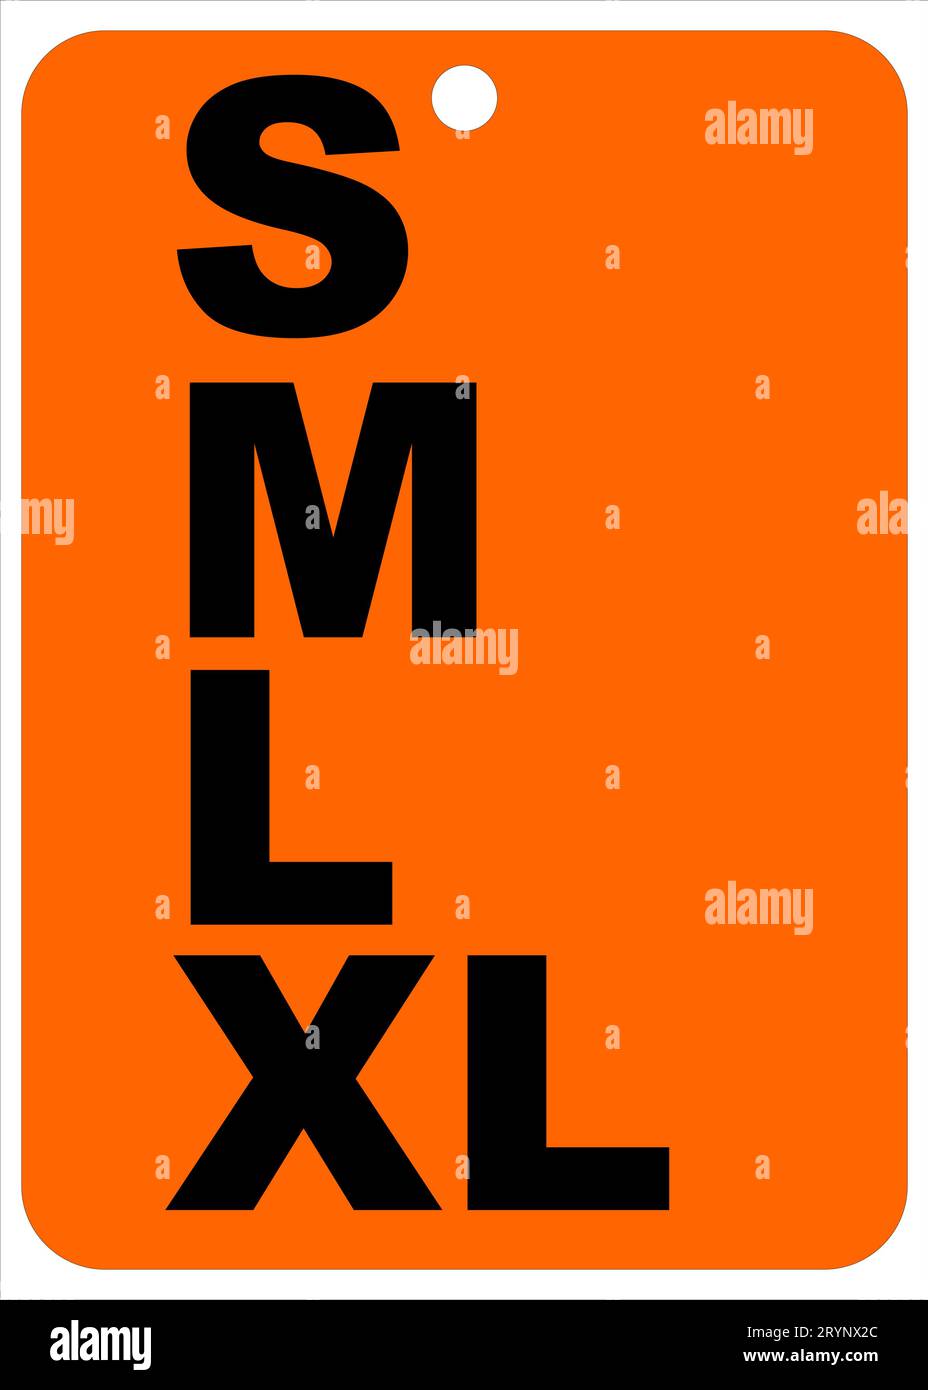 Small, Medium, Large, Extra Large (SMLXL) design - Vector Illustration Stock Vector